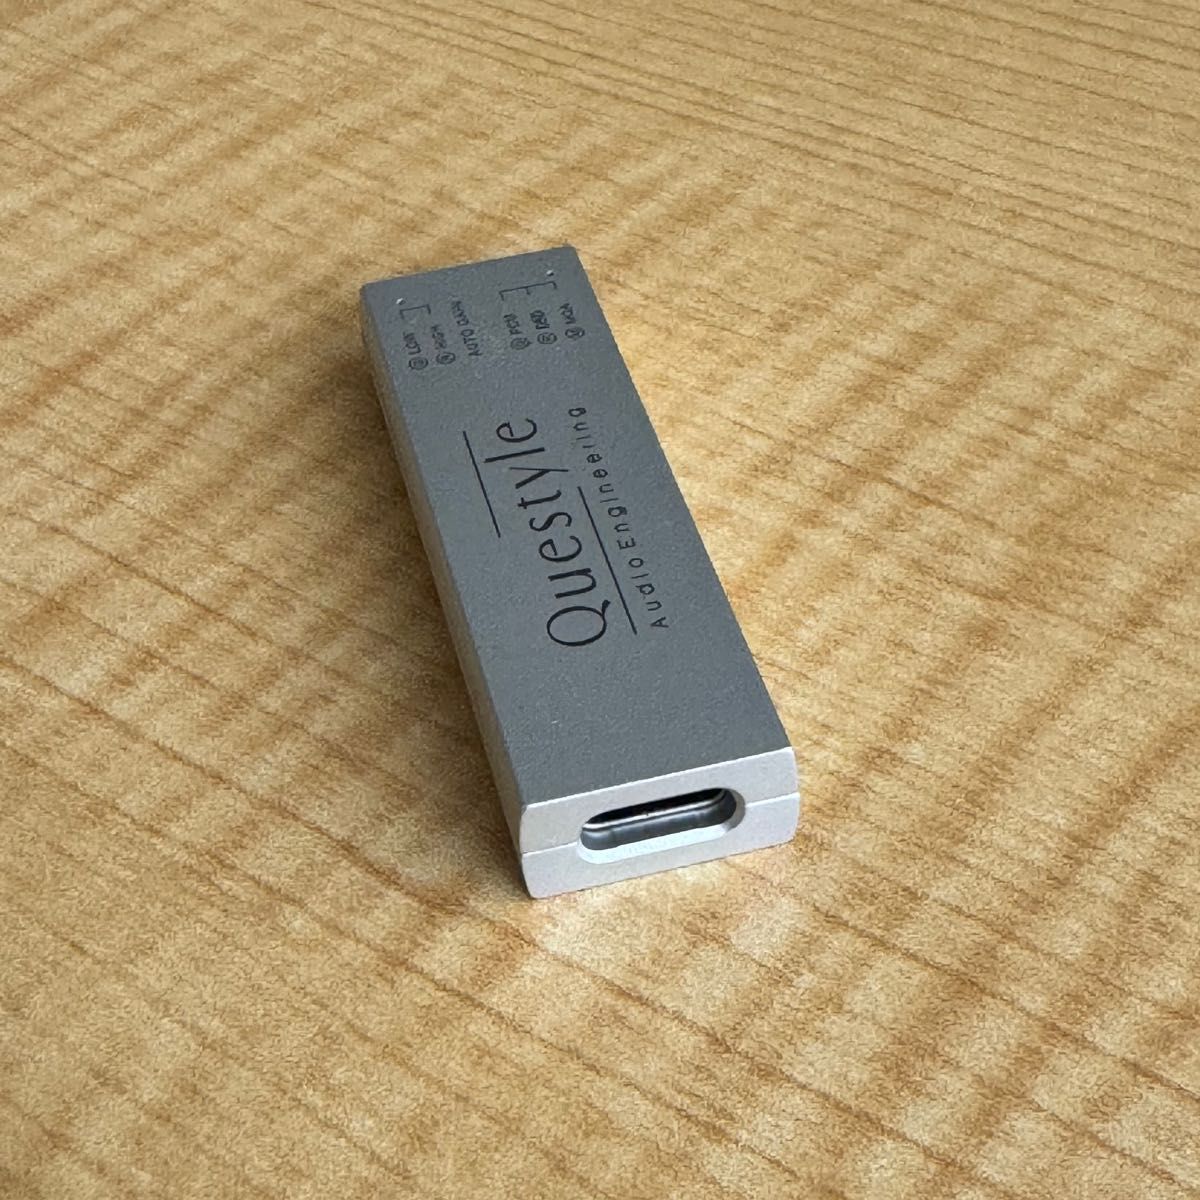  Questyle ポータブル USB DAC M12 シルバー